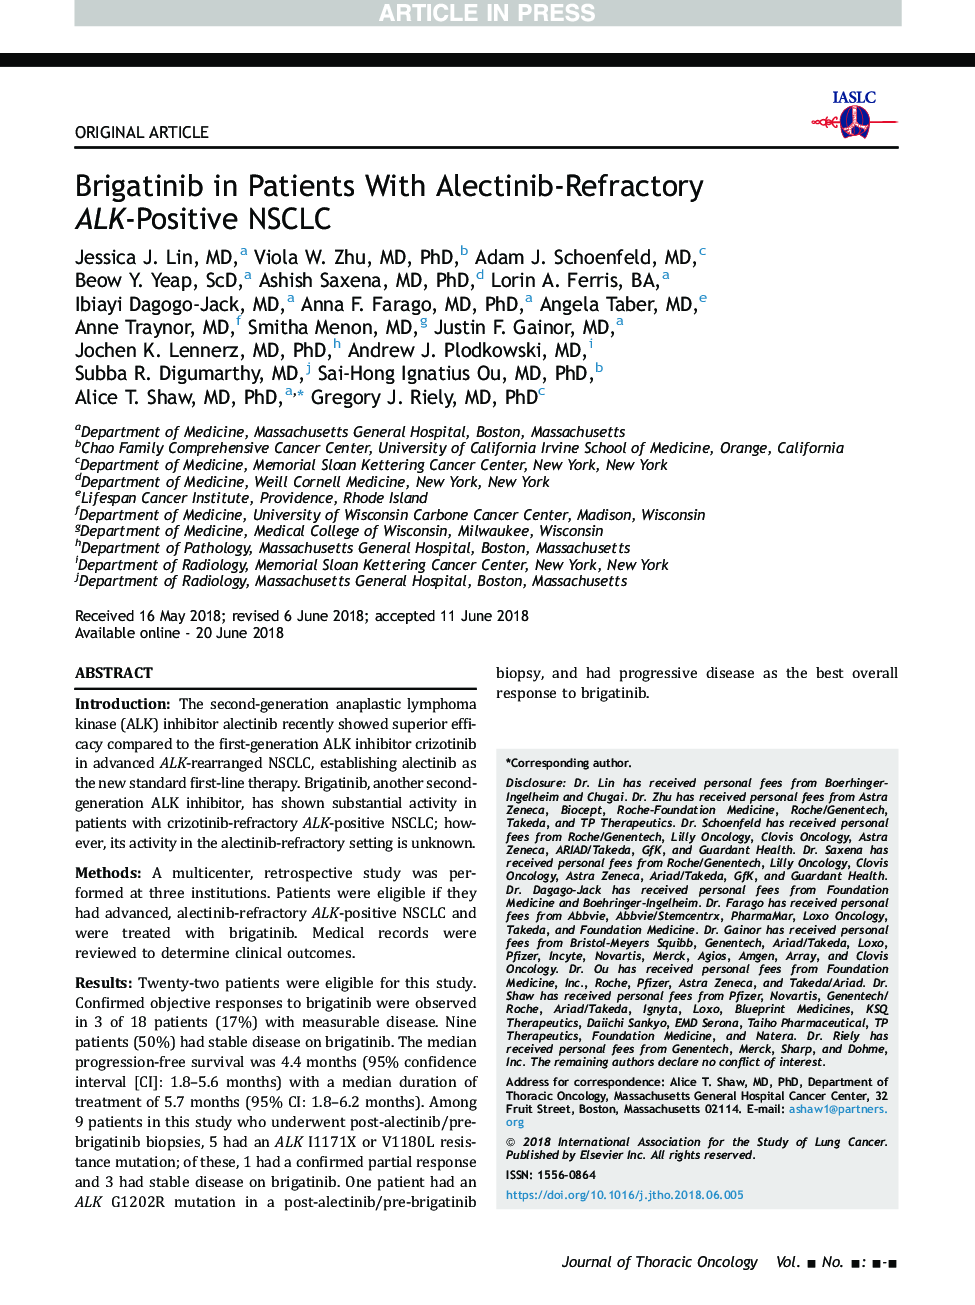 Brigatinib in Patients With Alectinib-Refractory ALK-Positive NSCLC